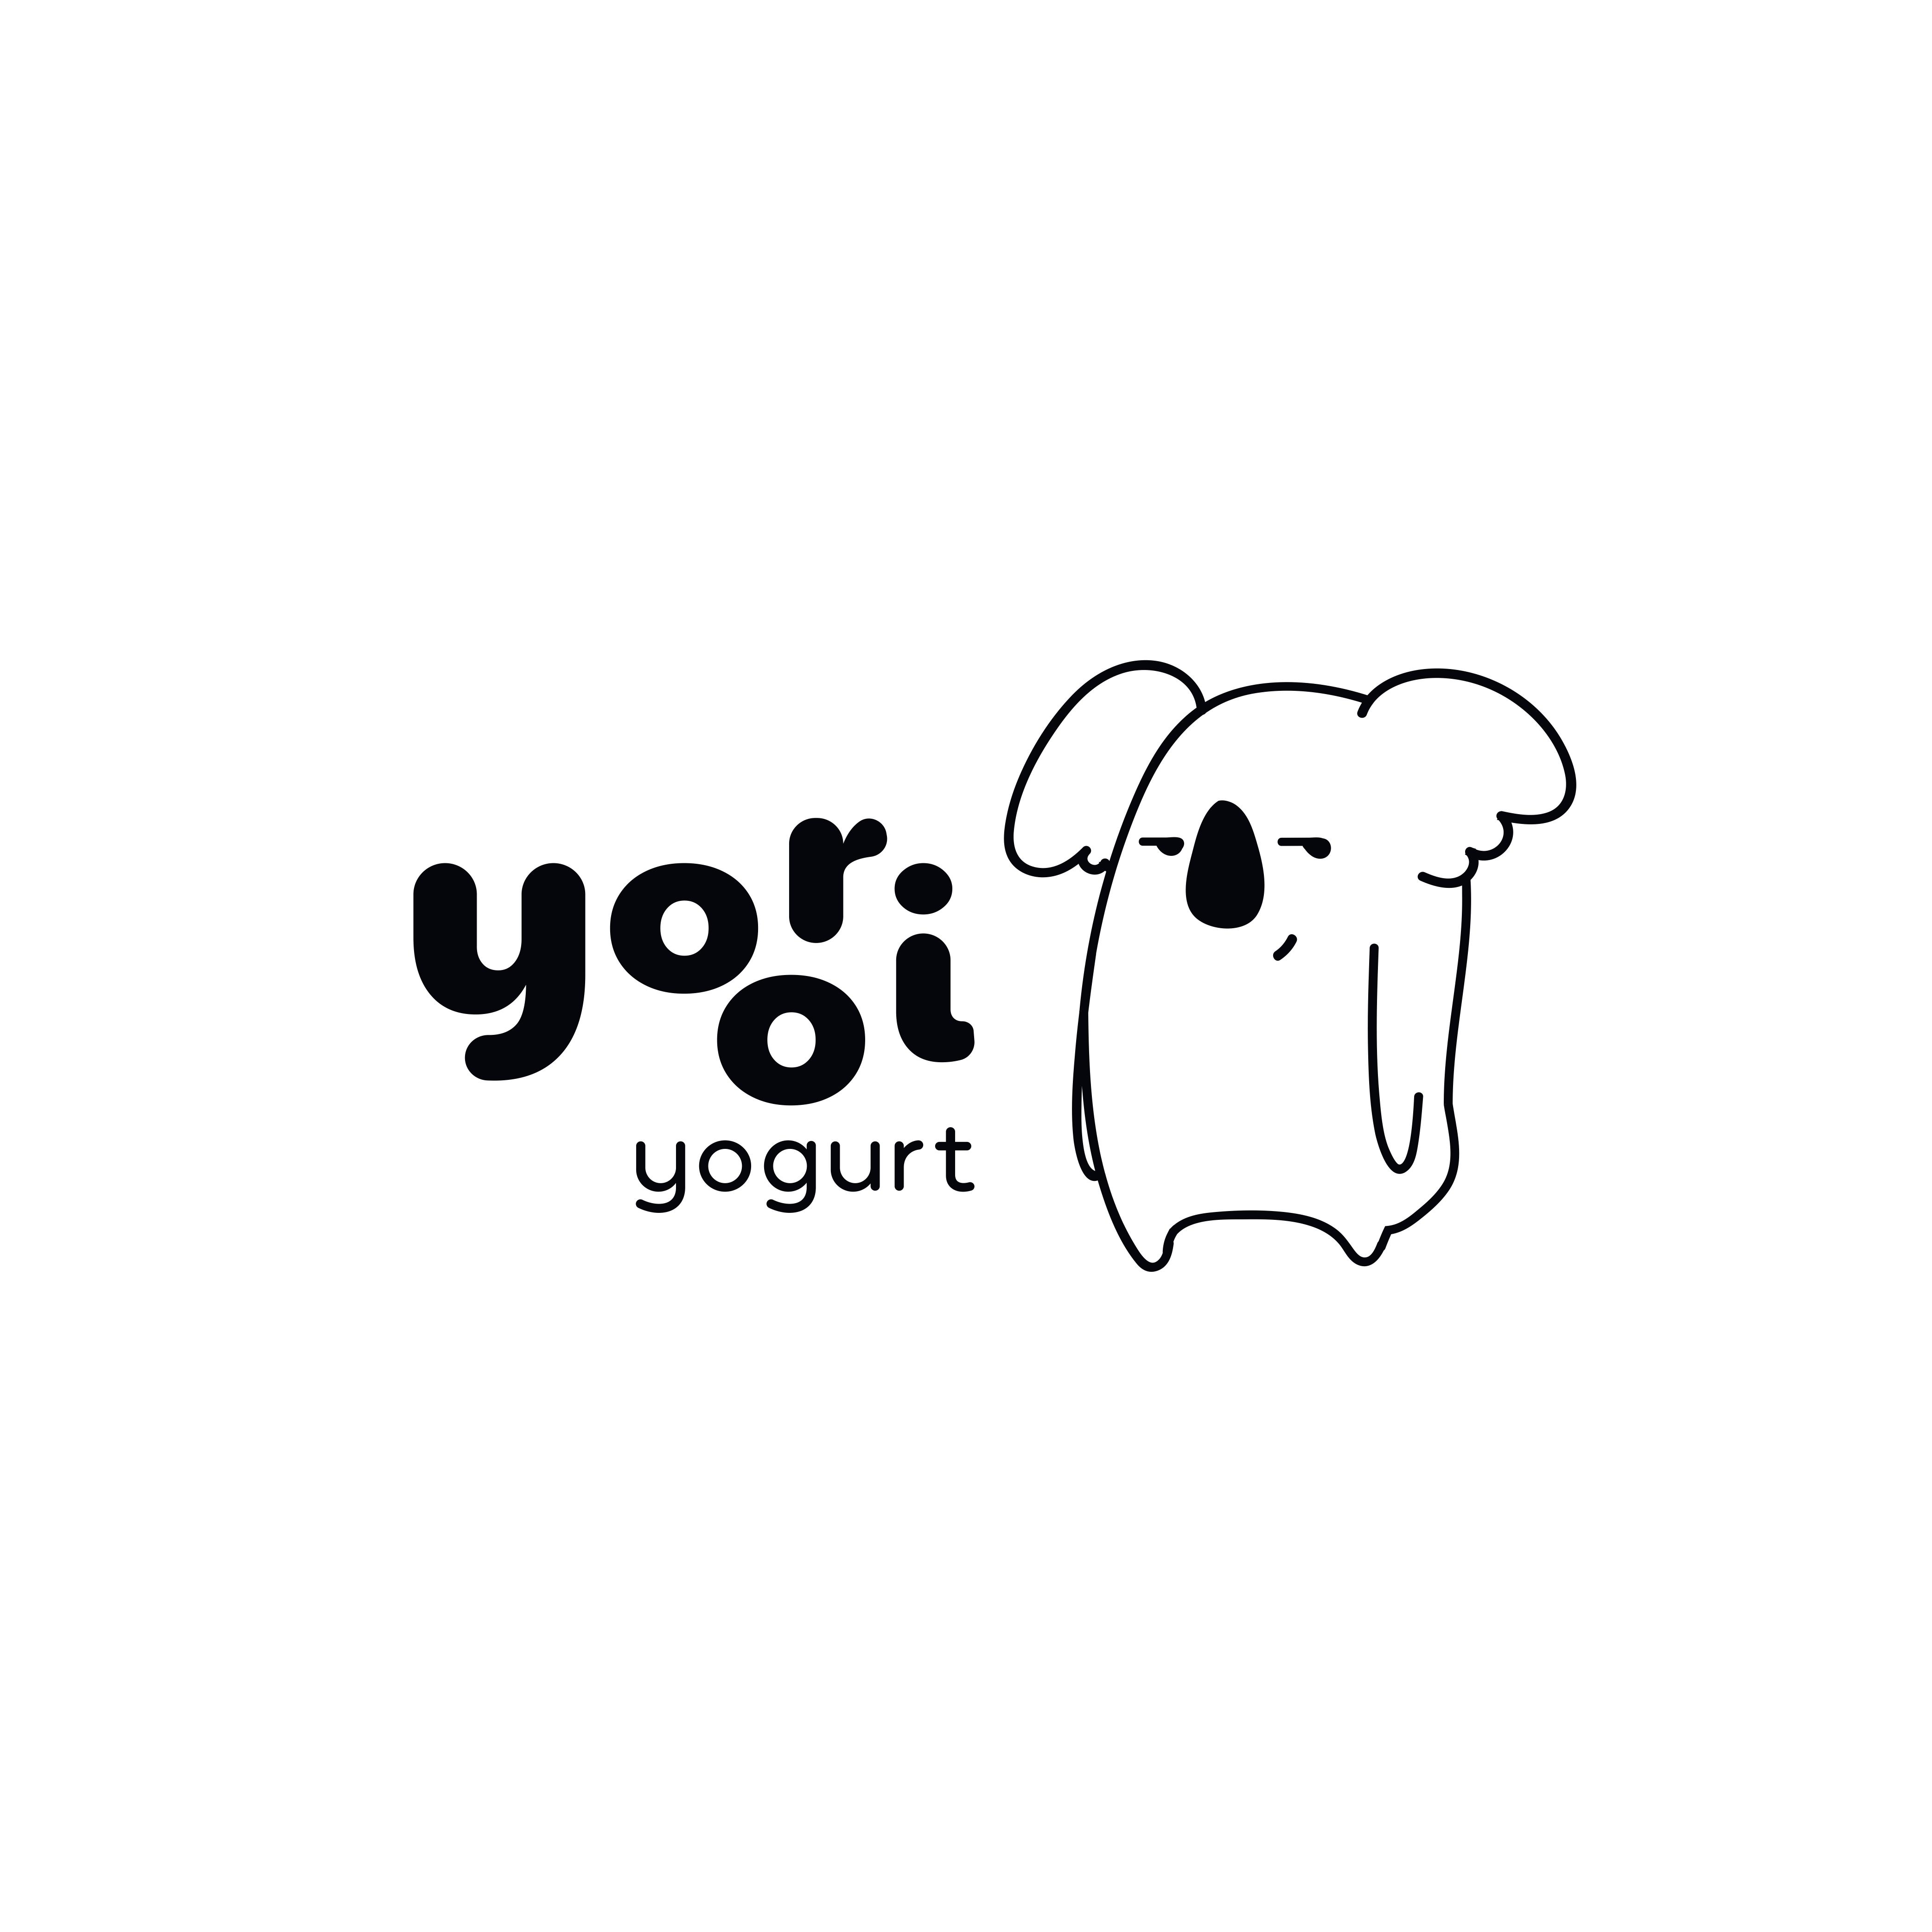 Yoori Yogurt